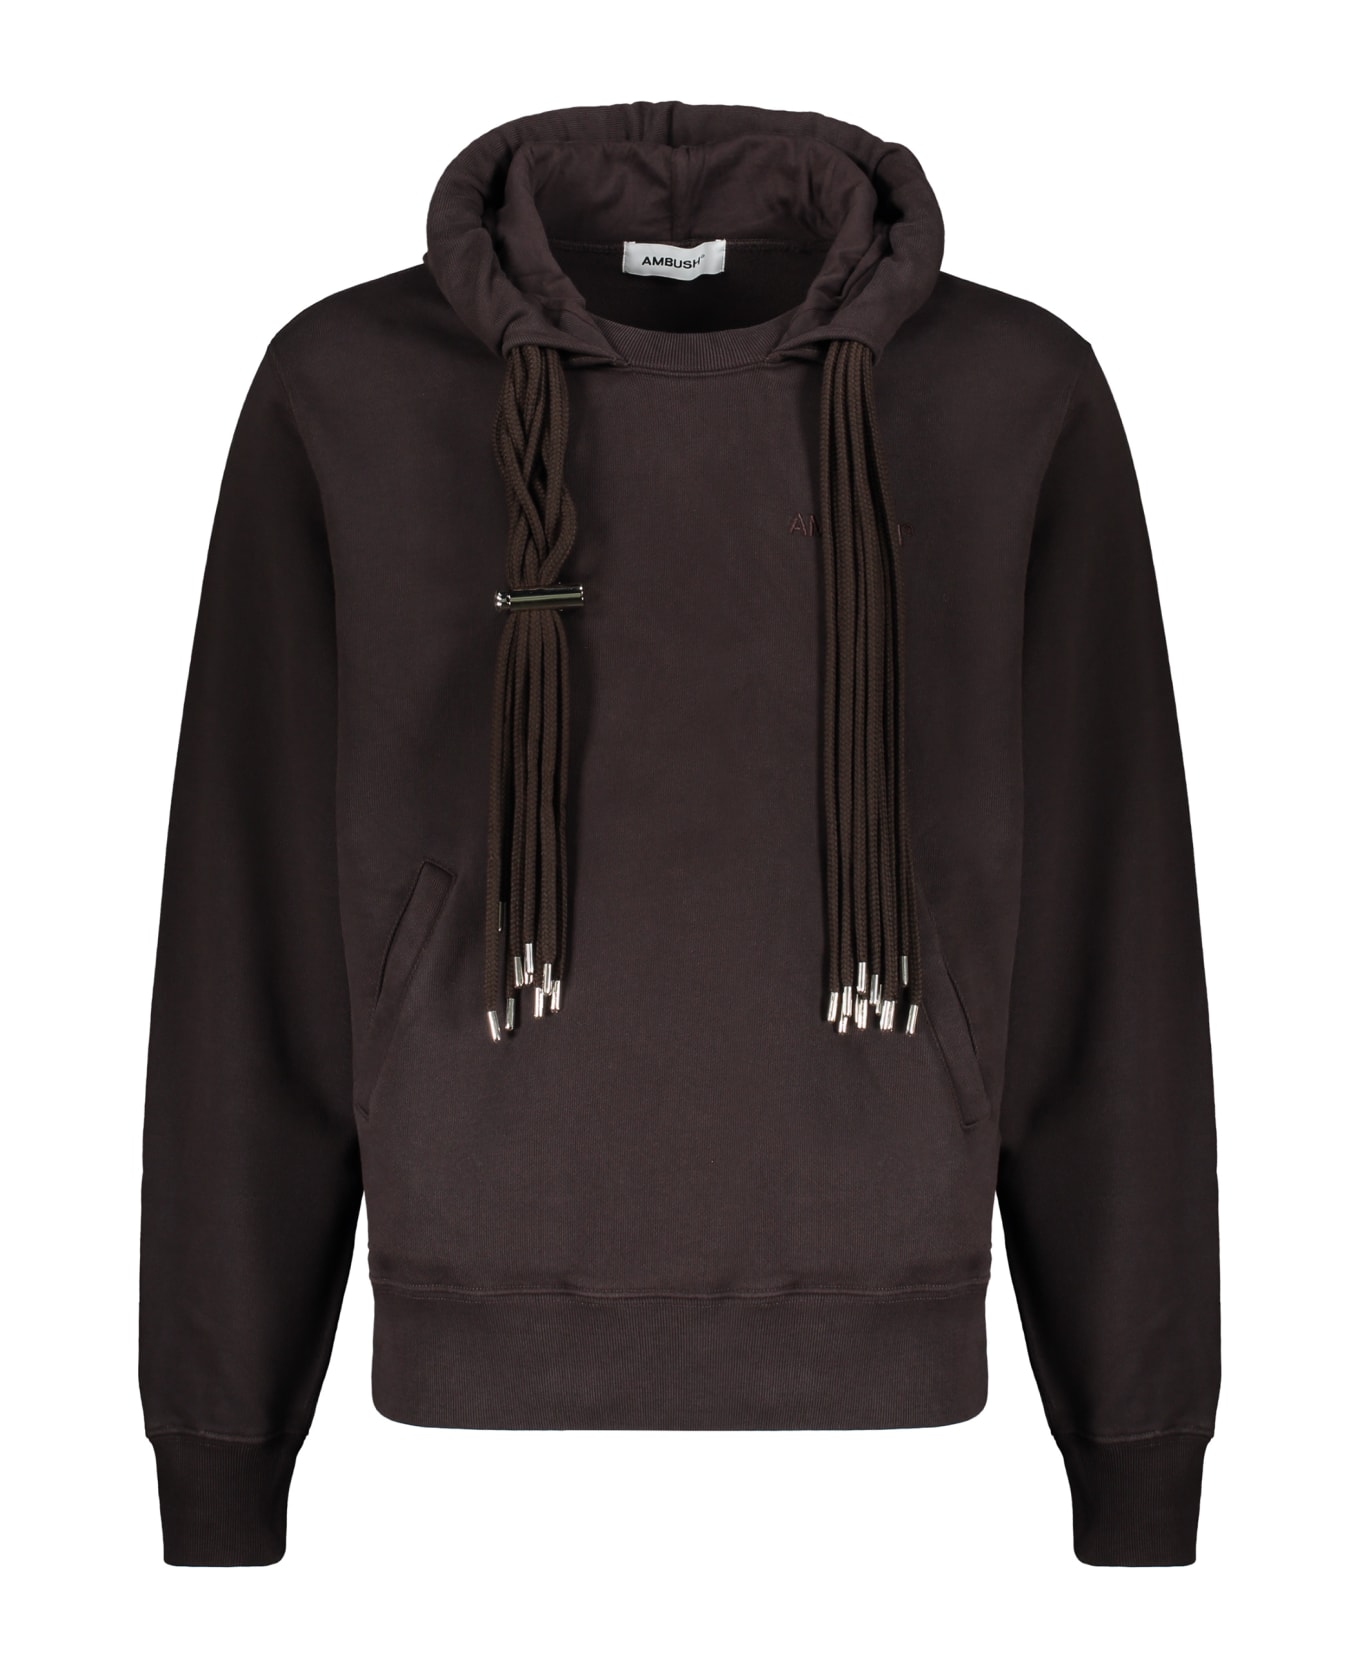 AMBUSH Hooded Sweatshirt - brown